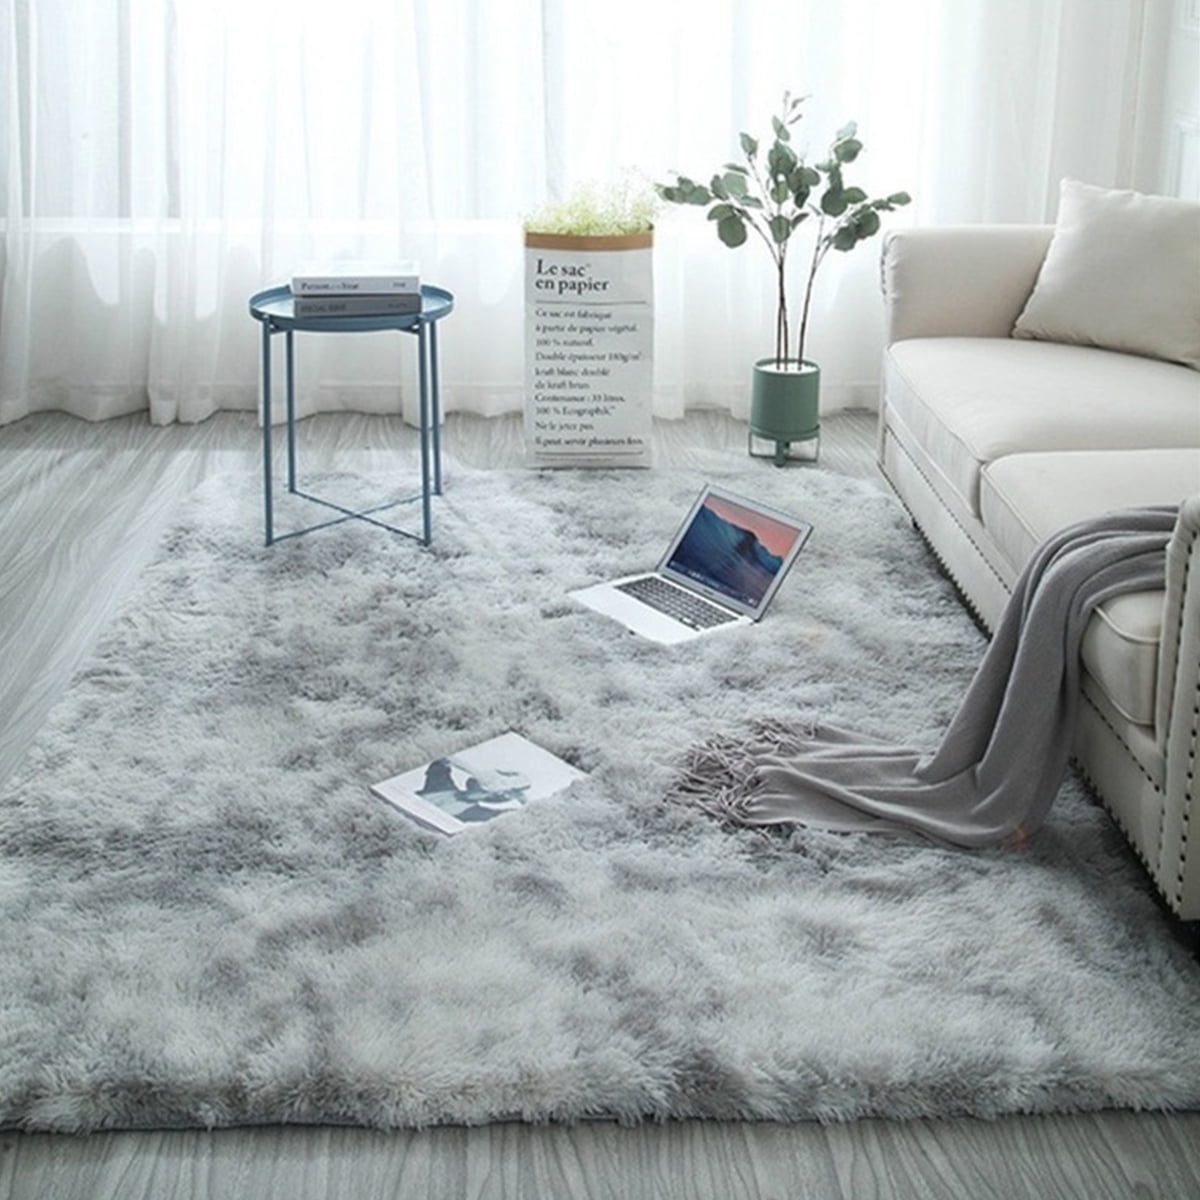 Contemporary Modern Soft Area Rugs Nonslip Home Room Carpet Floor Mat Rug 